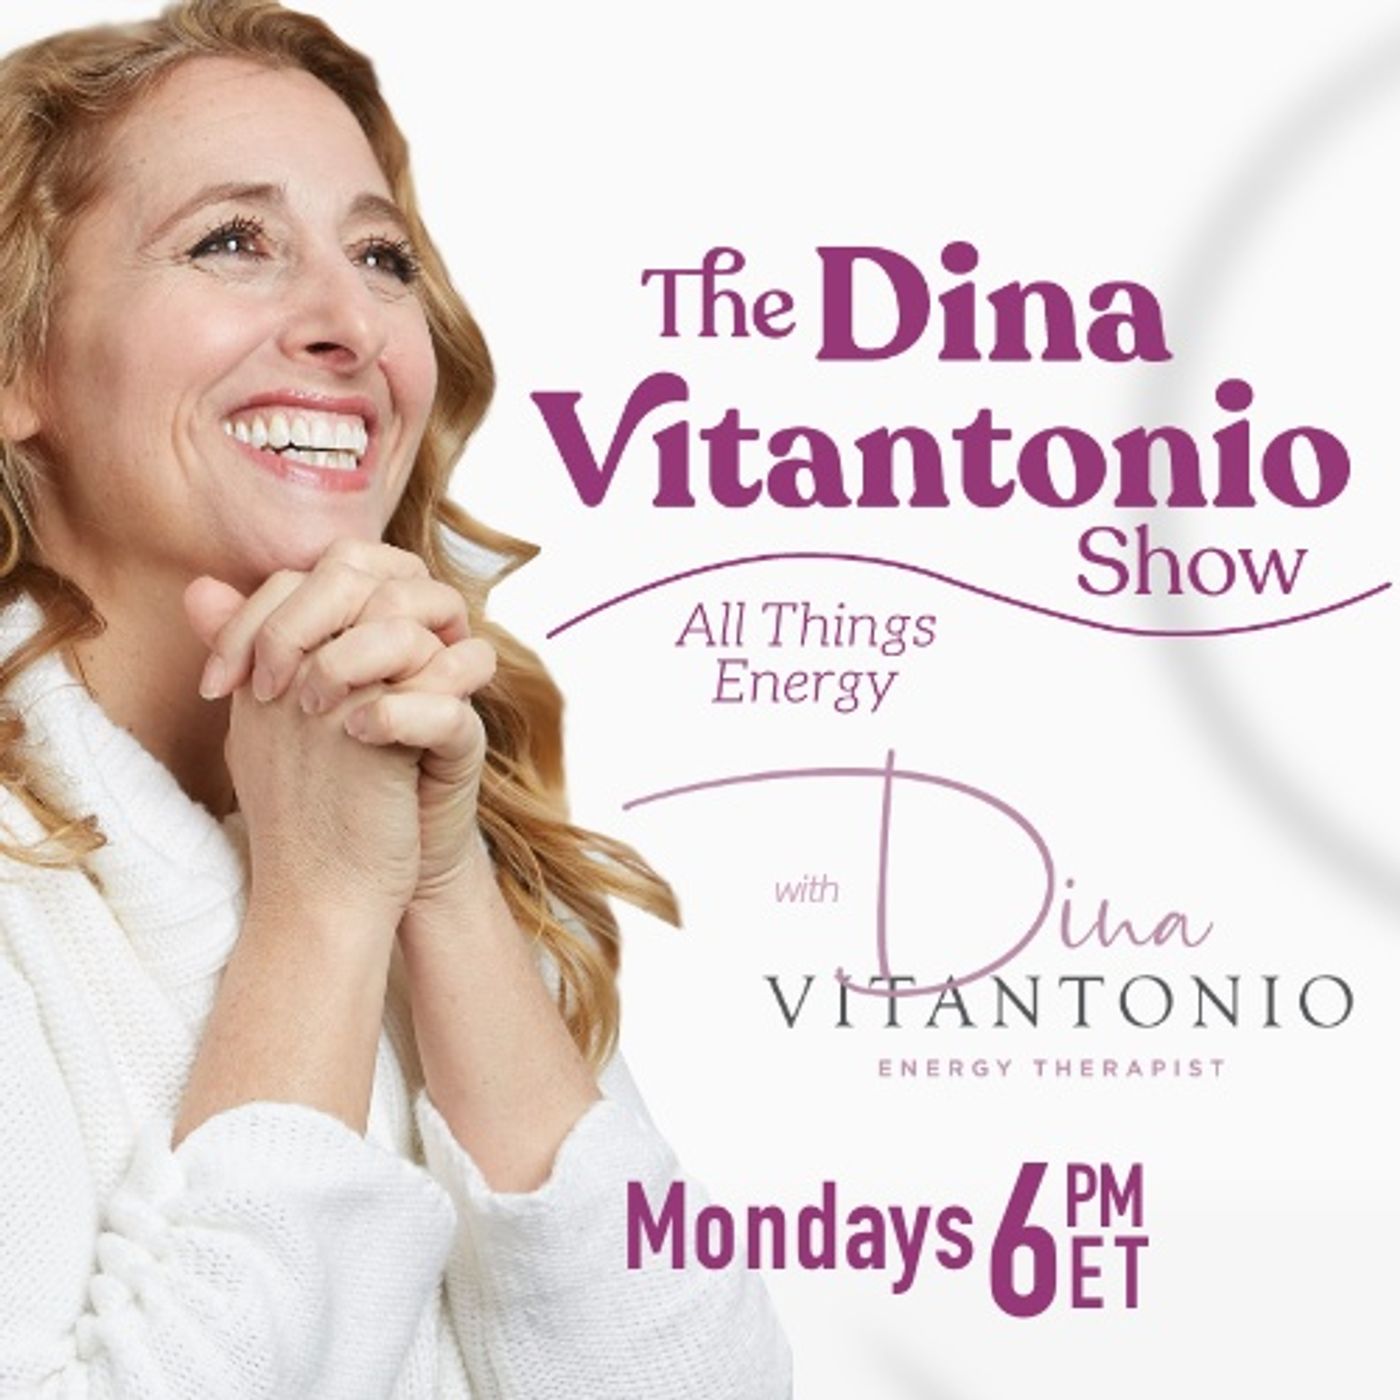 The Dina Vitantonio Show Image